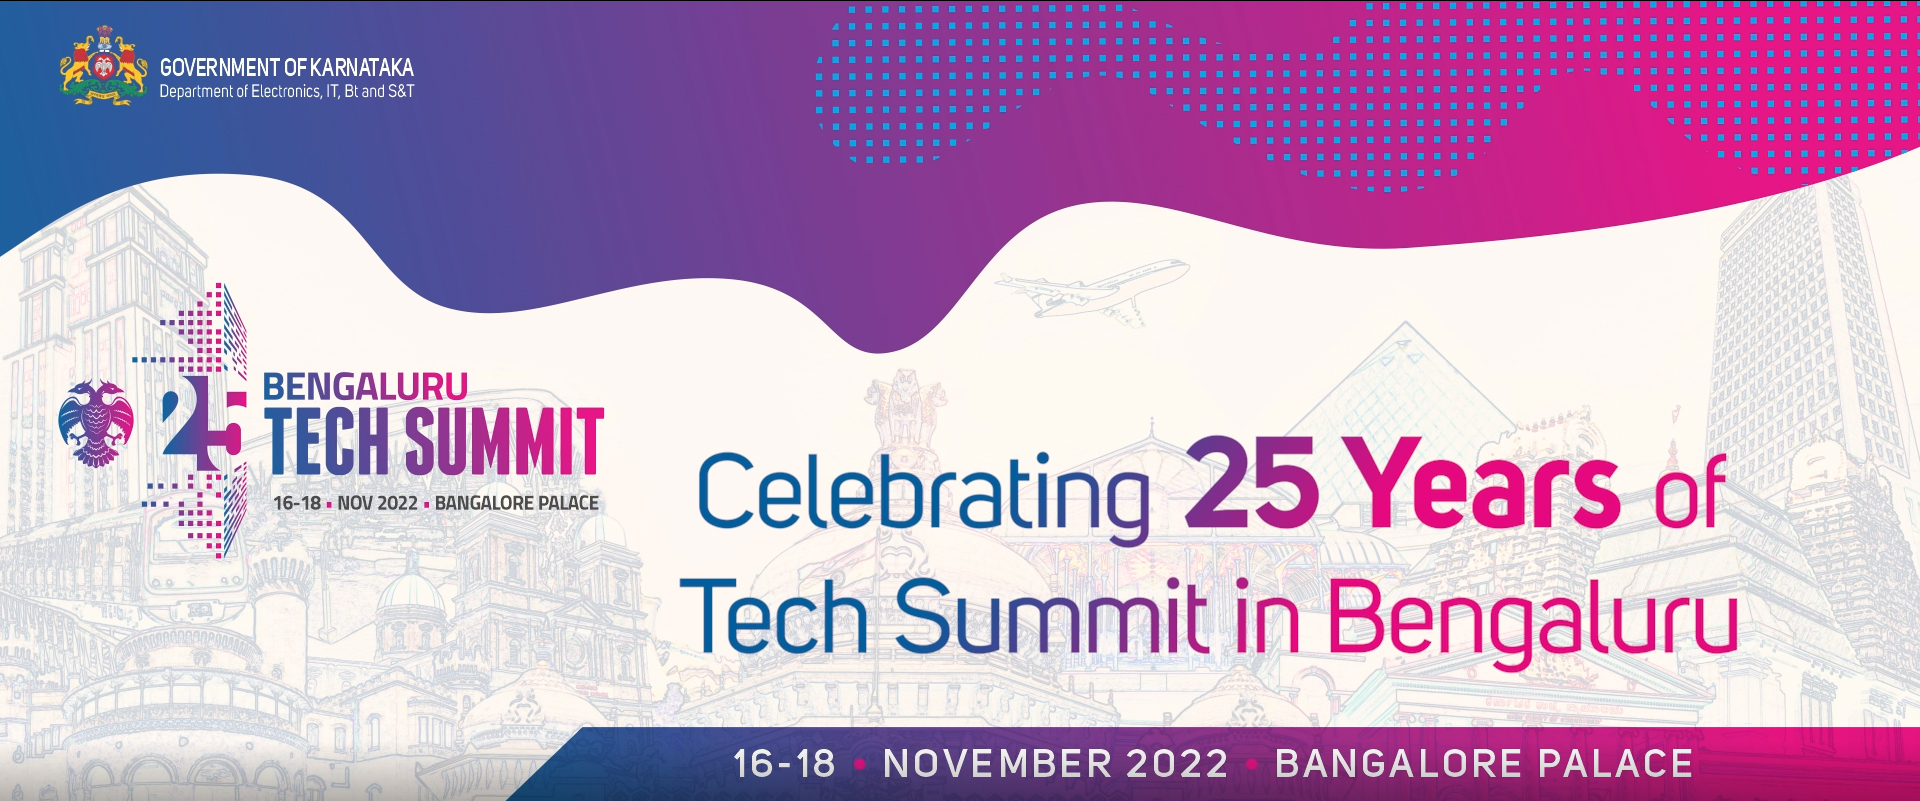 Nagi Bioscience at Bengaluru Tech Summit 2022 India